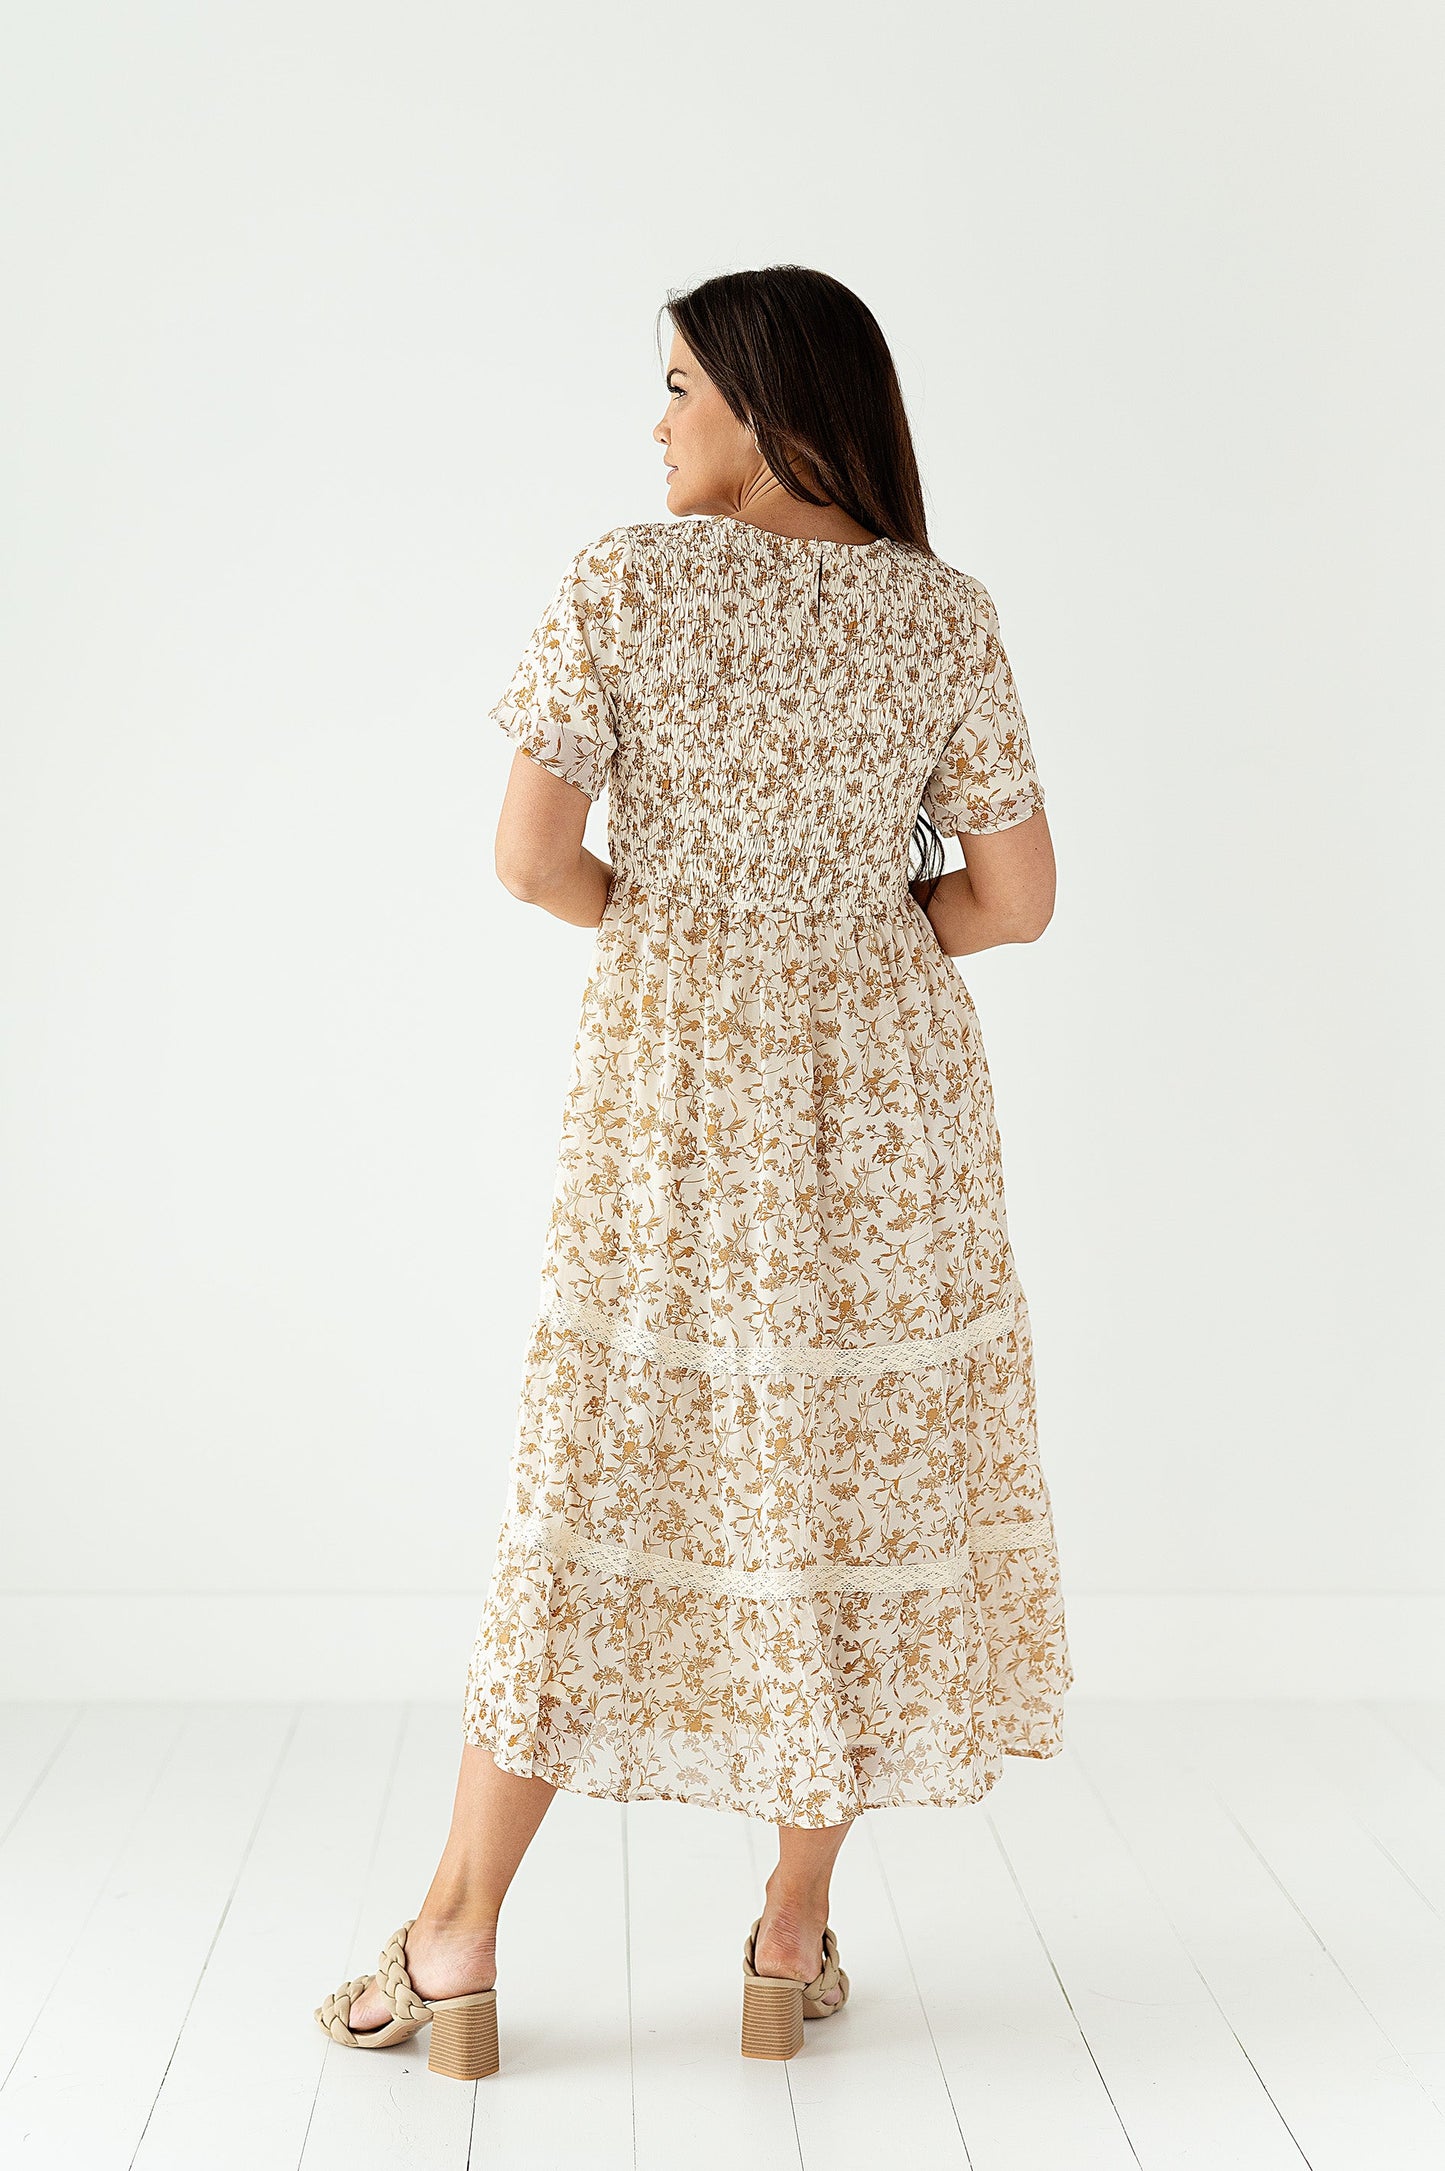 yayaq™-Ramona Tiered Dress in Ivory